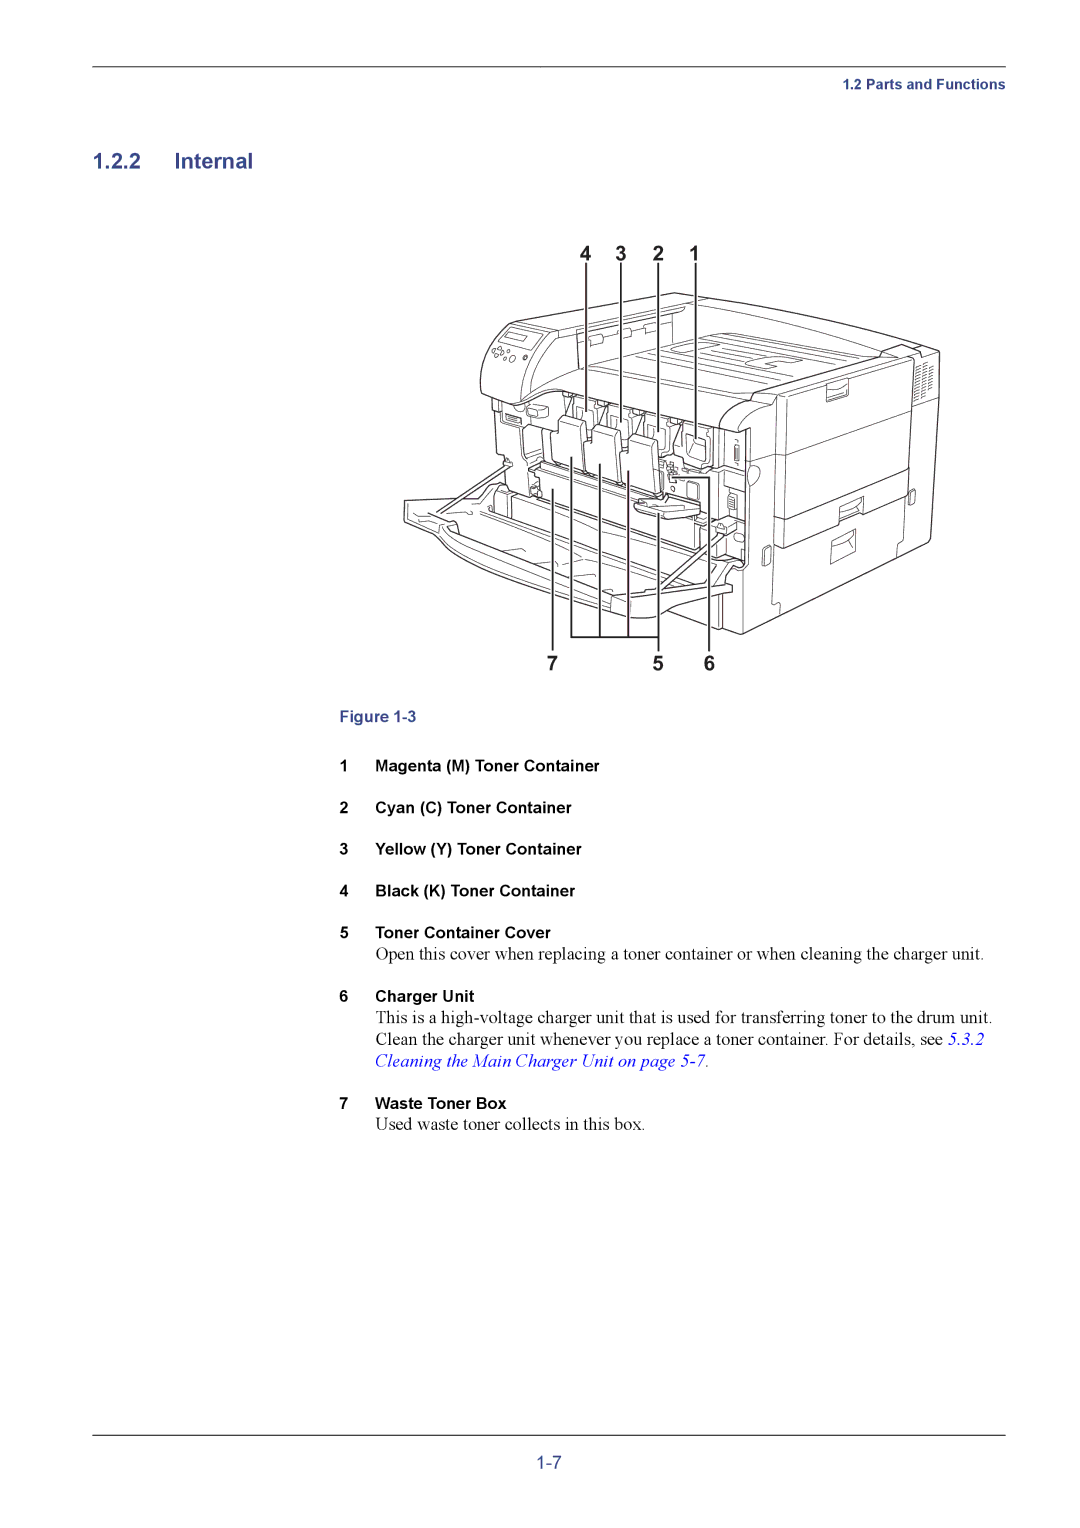 Kyocera FS-C8026N manual Internal, Charger Unit, Waste Toner Box 